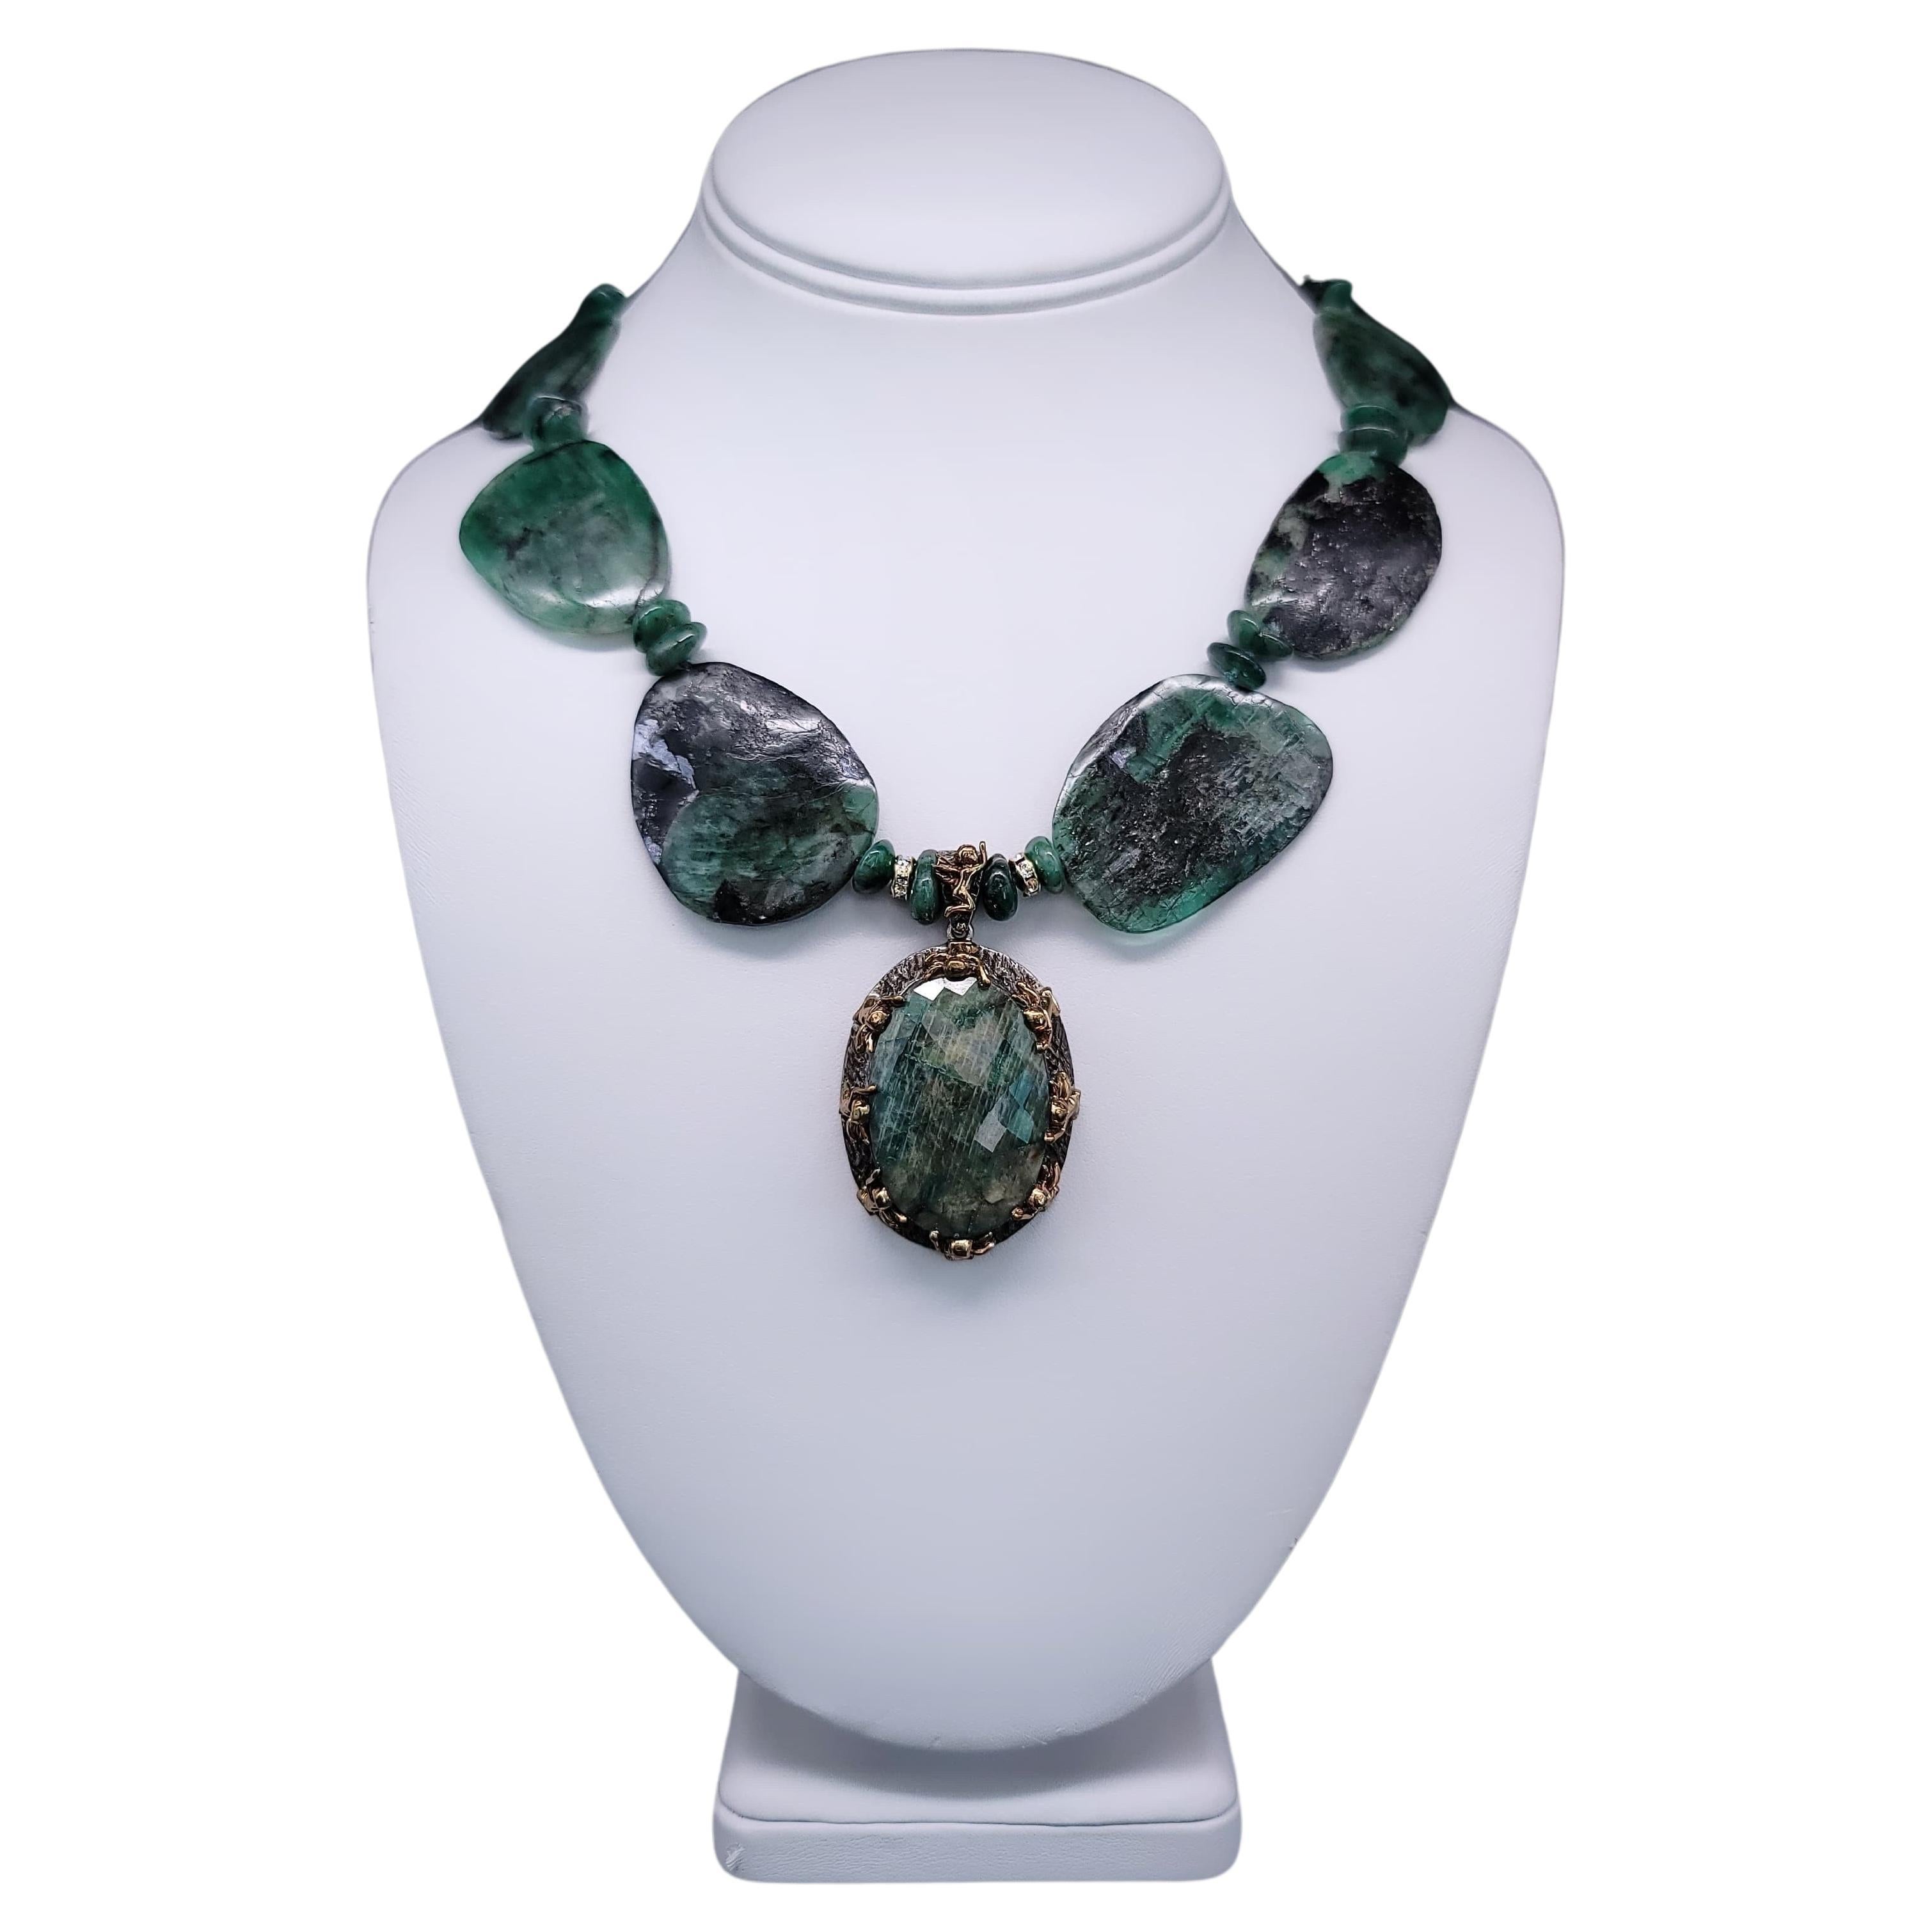 A.jeschel Stunning Emerald pendant Necklace. For Sale